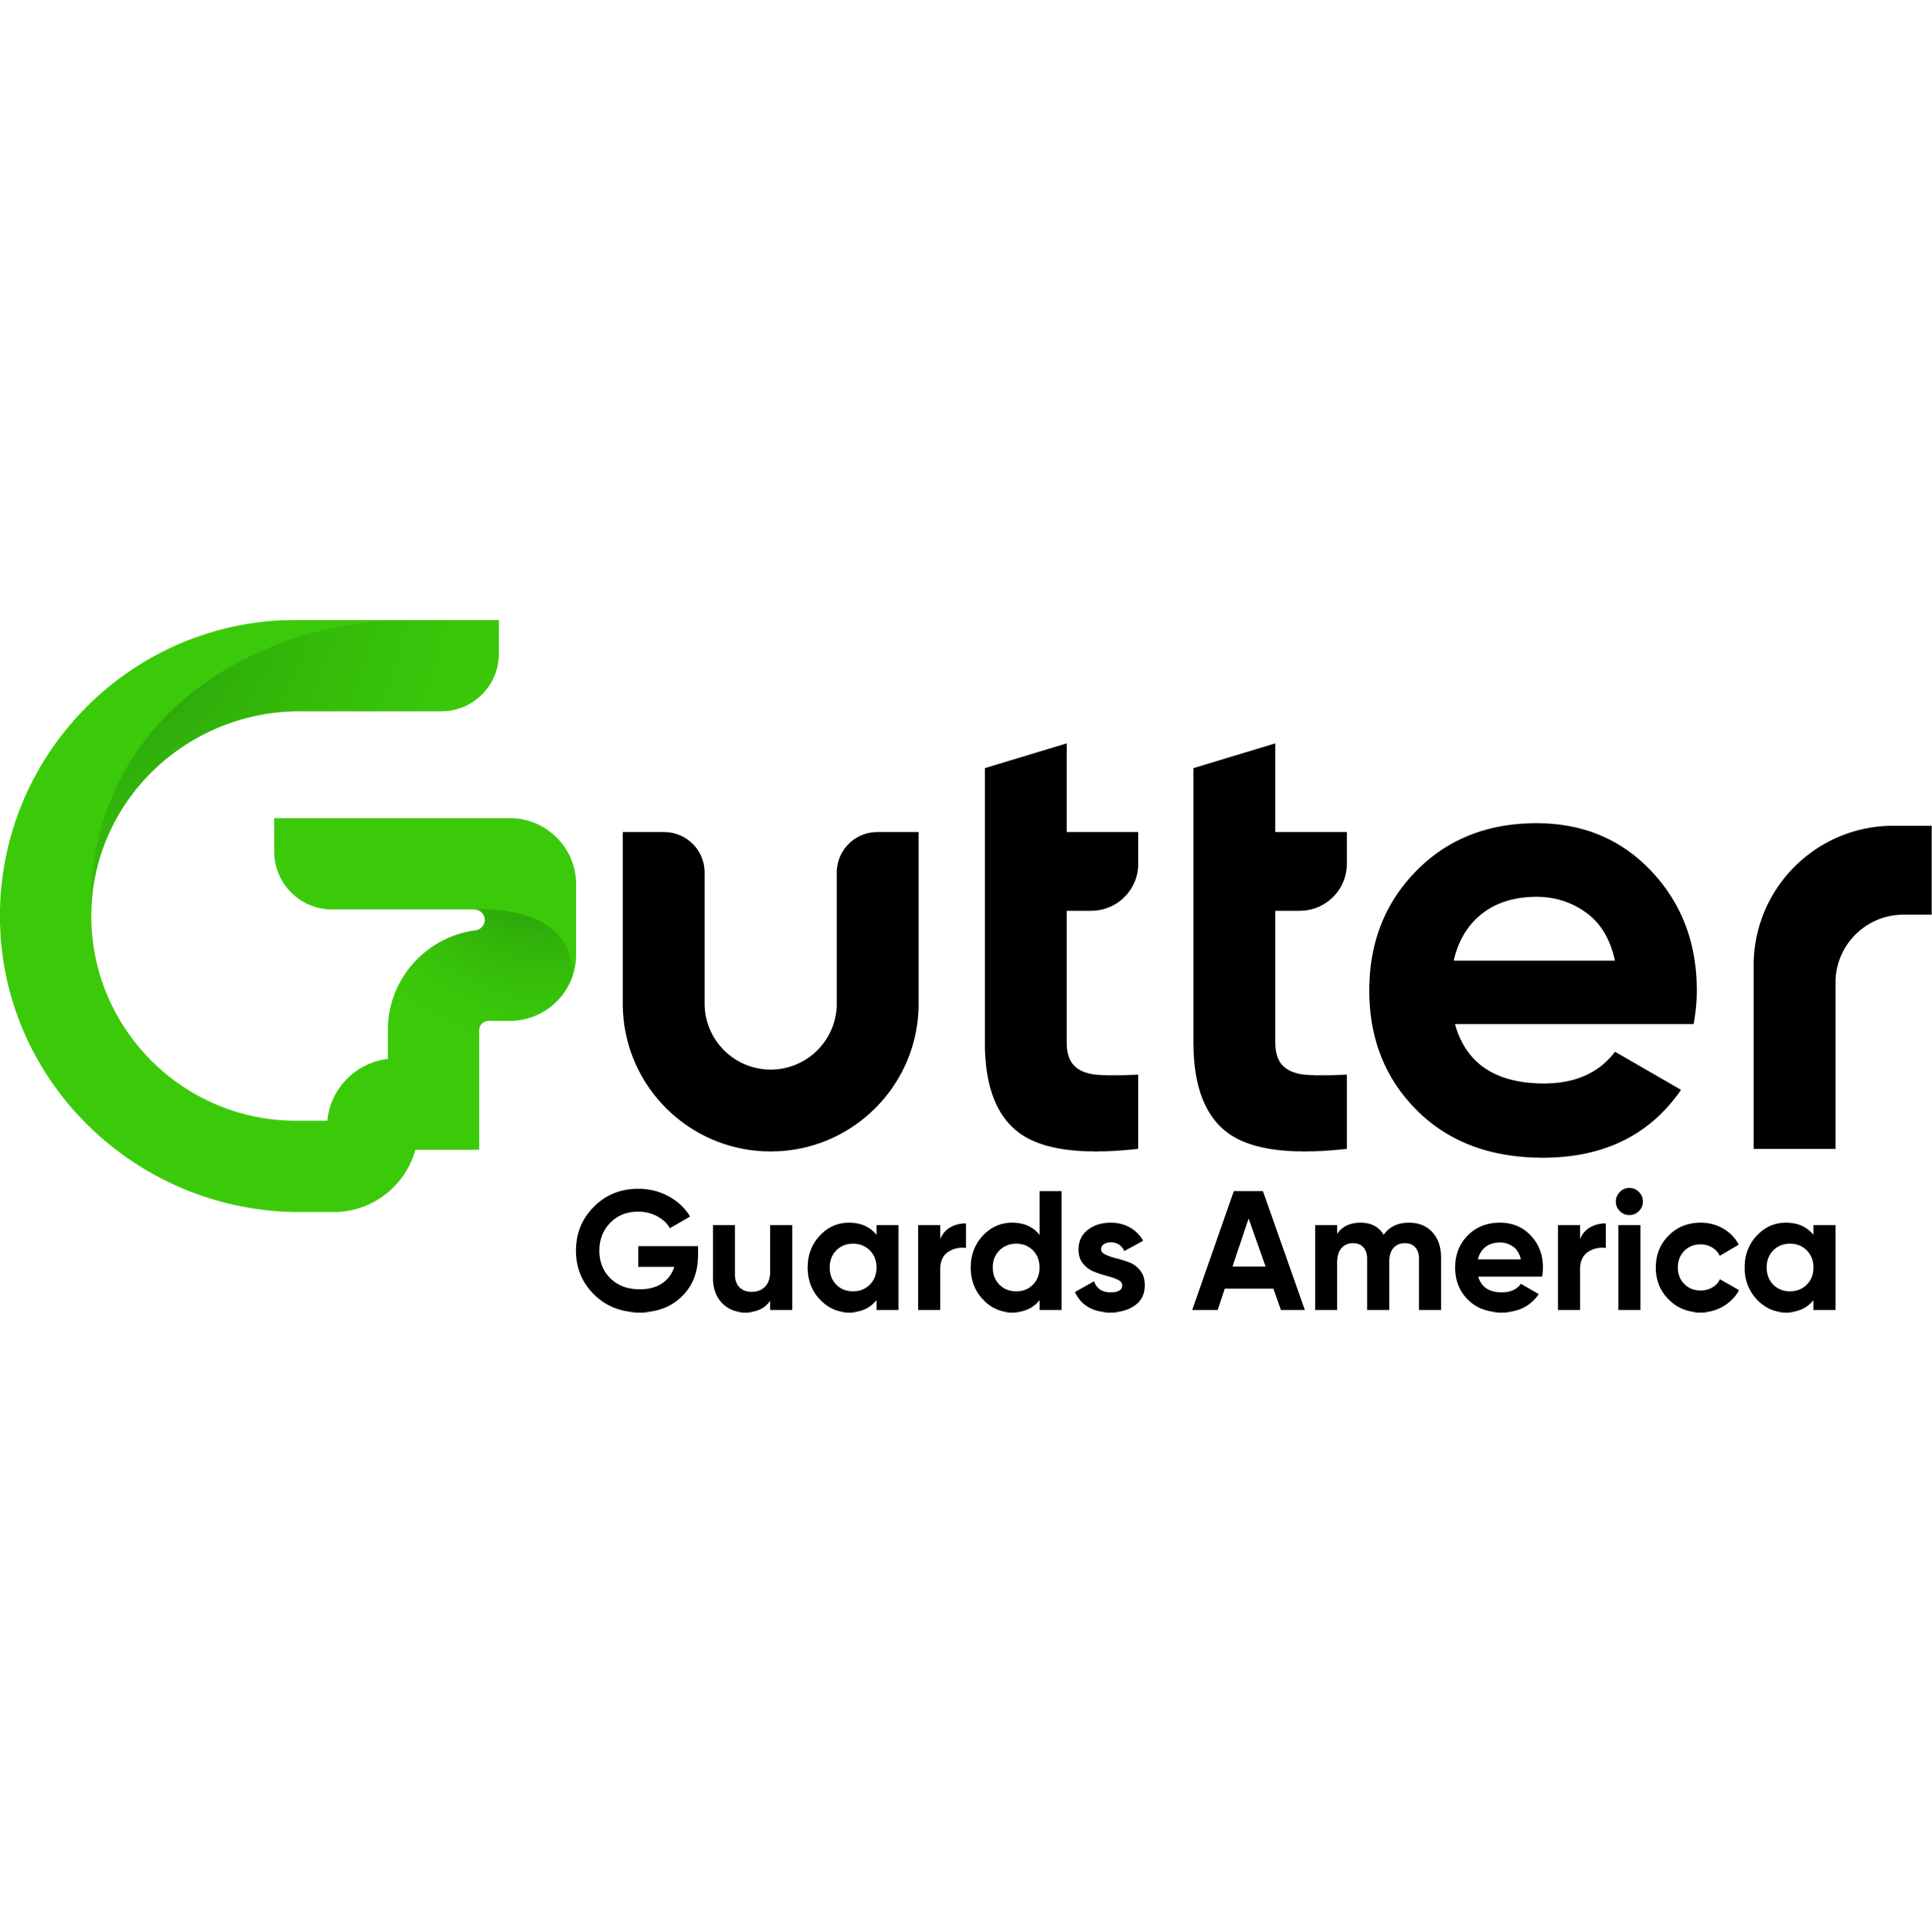 Gutter Guards America Logo